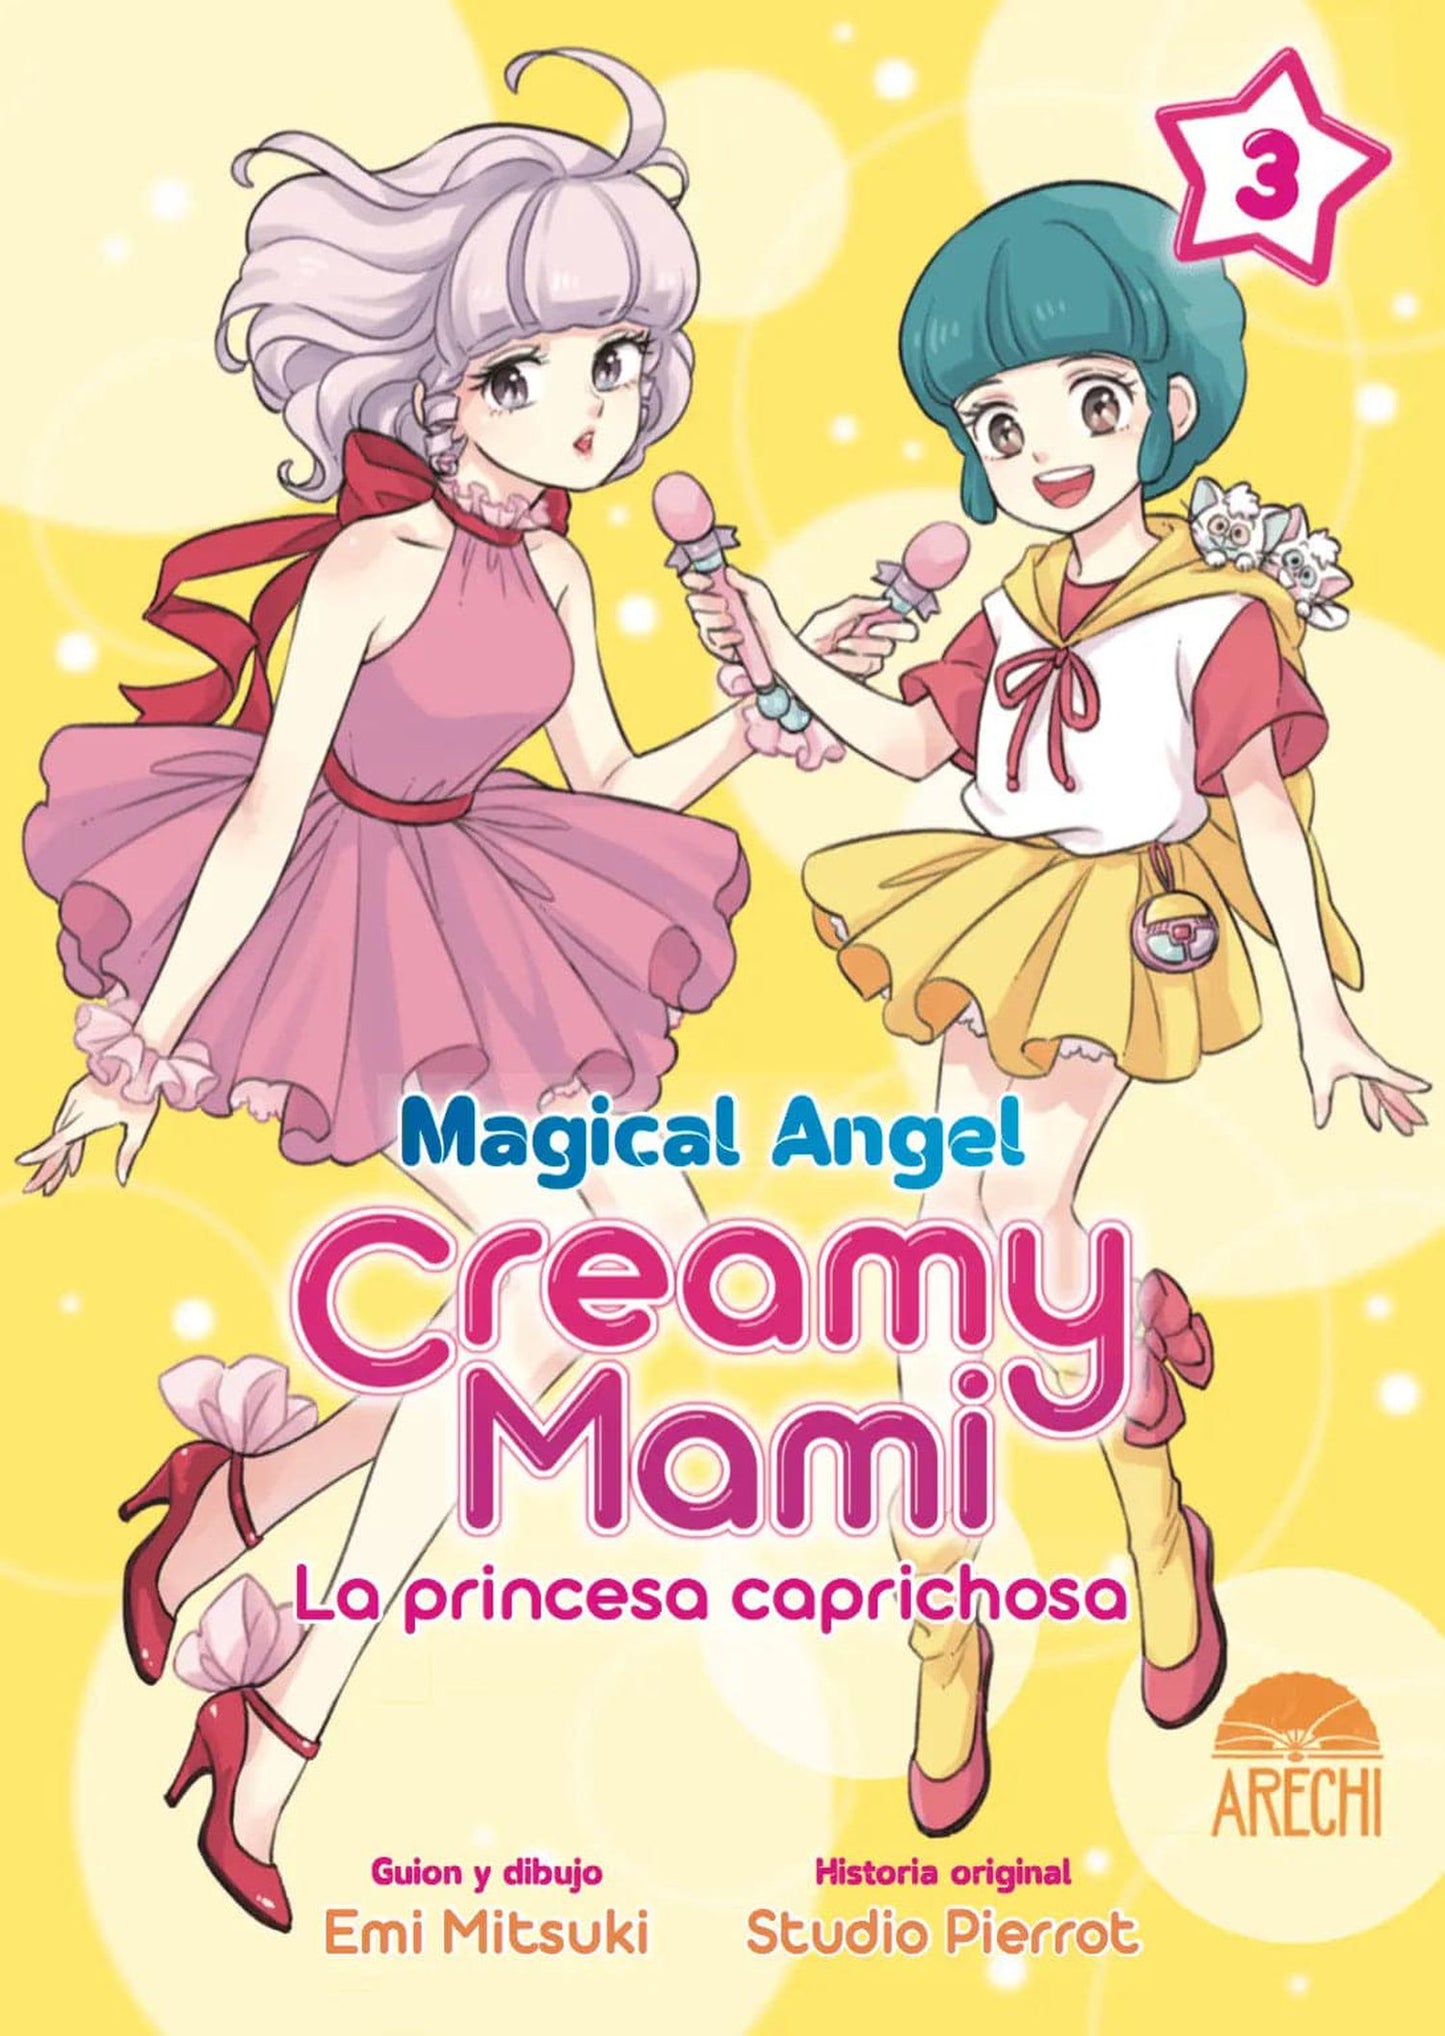 Magical Angel Creamy Mami: La Princesa Caprichosa 3 Arechi ENcuadrocomics